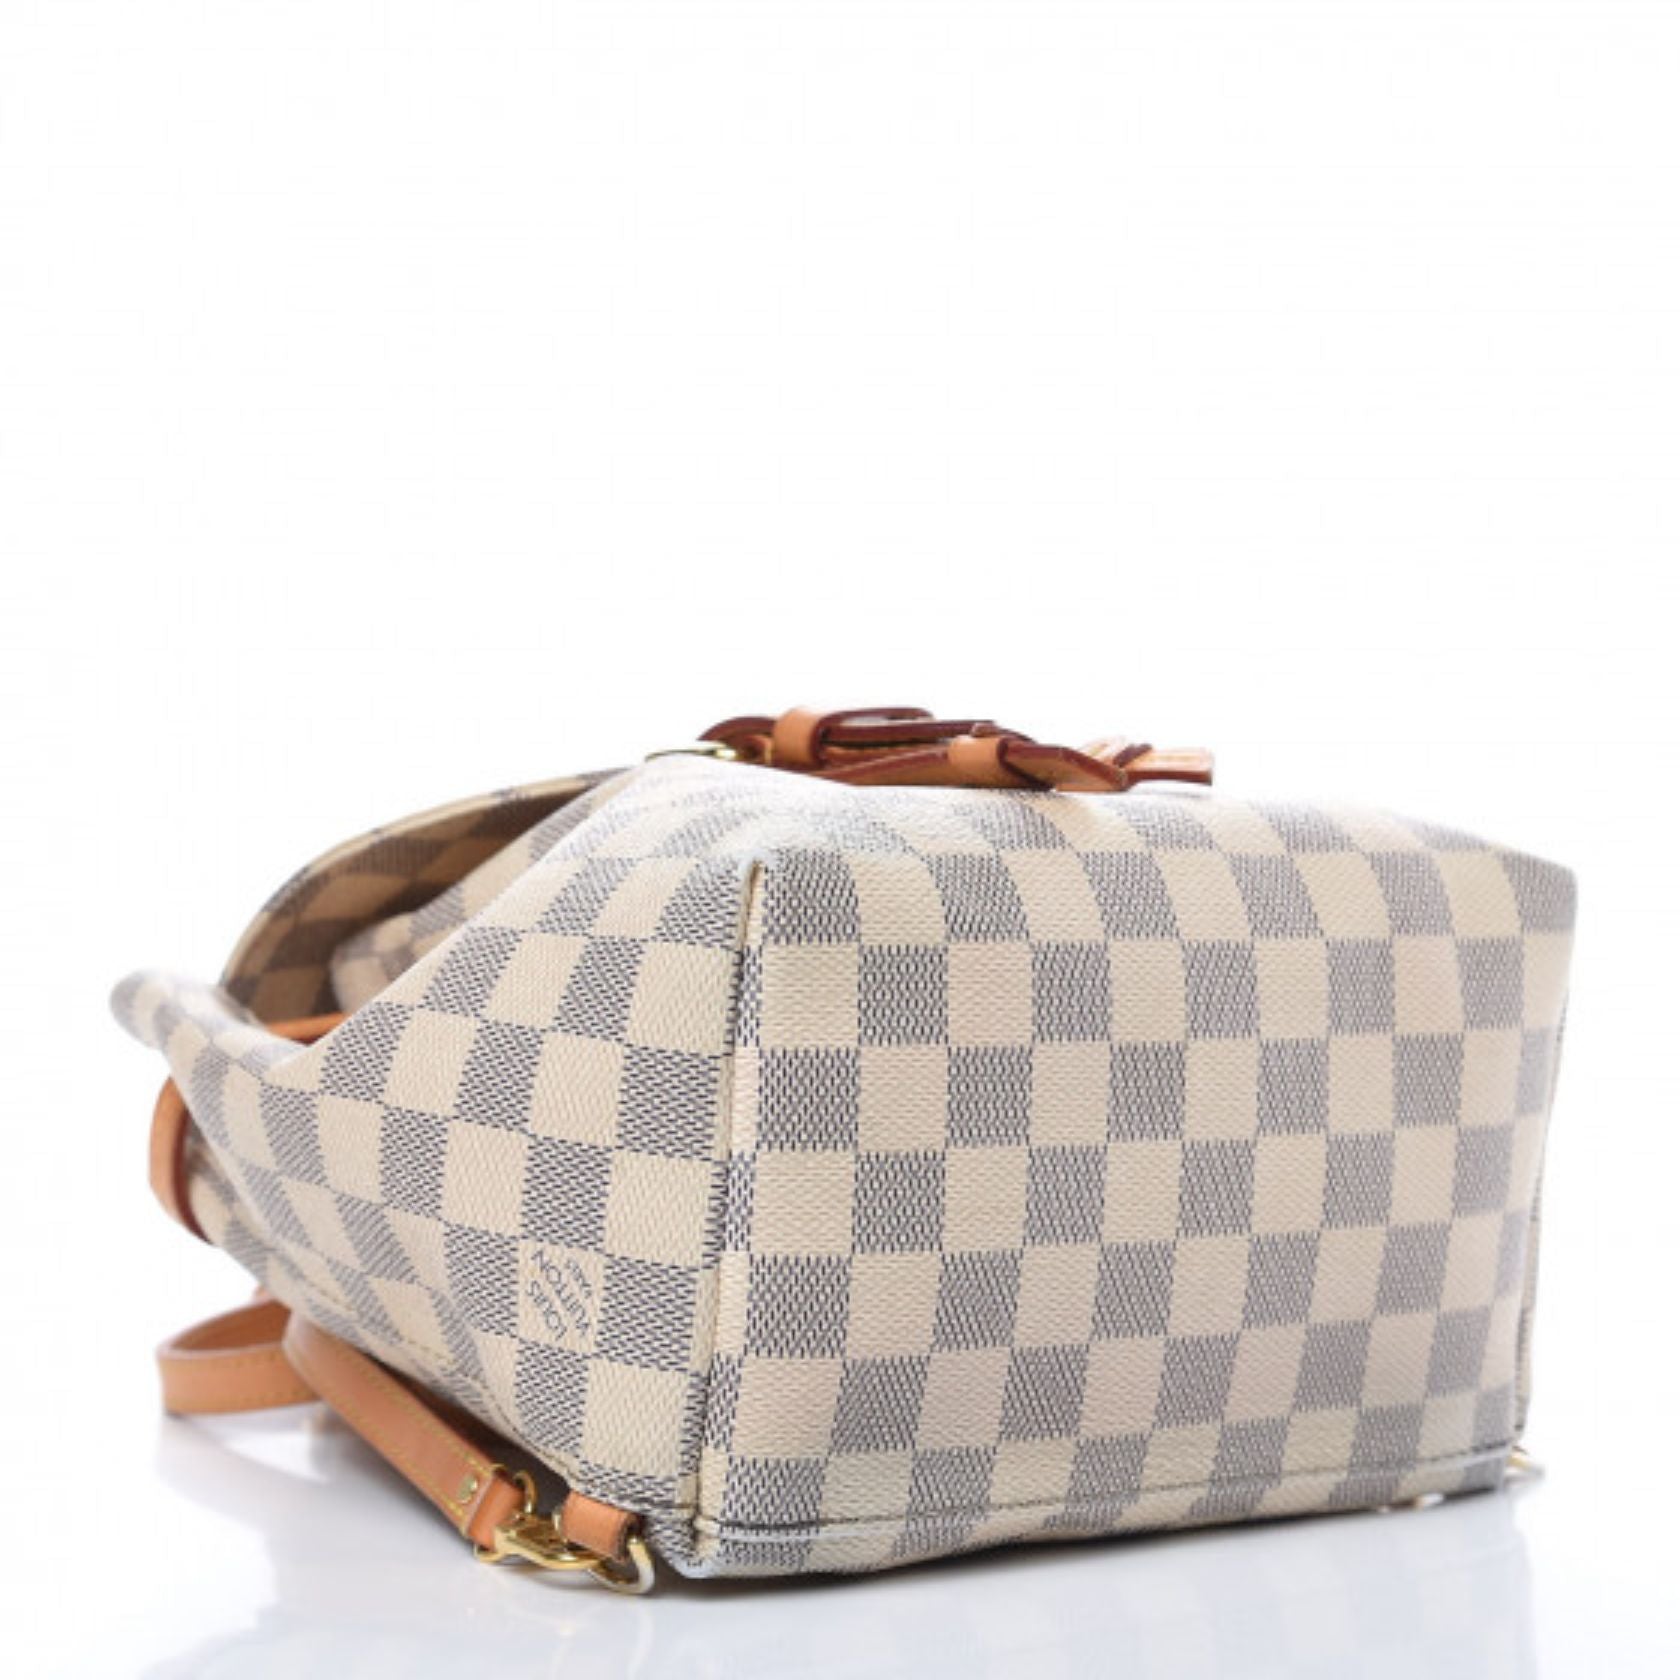 Louis Vuitton Sperone Damier Azur Backpack Bag White